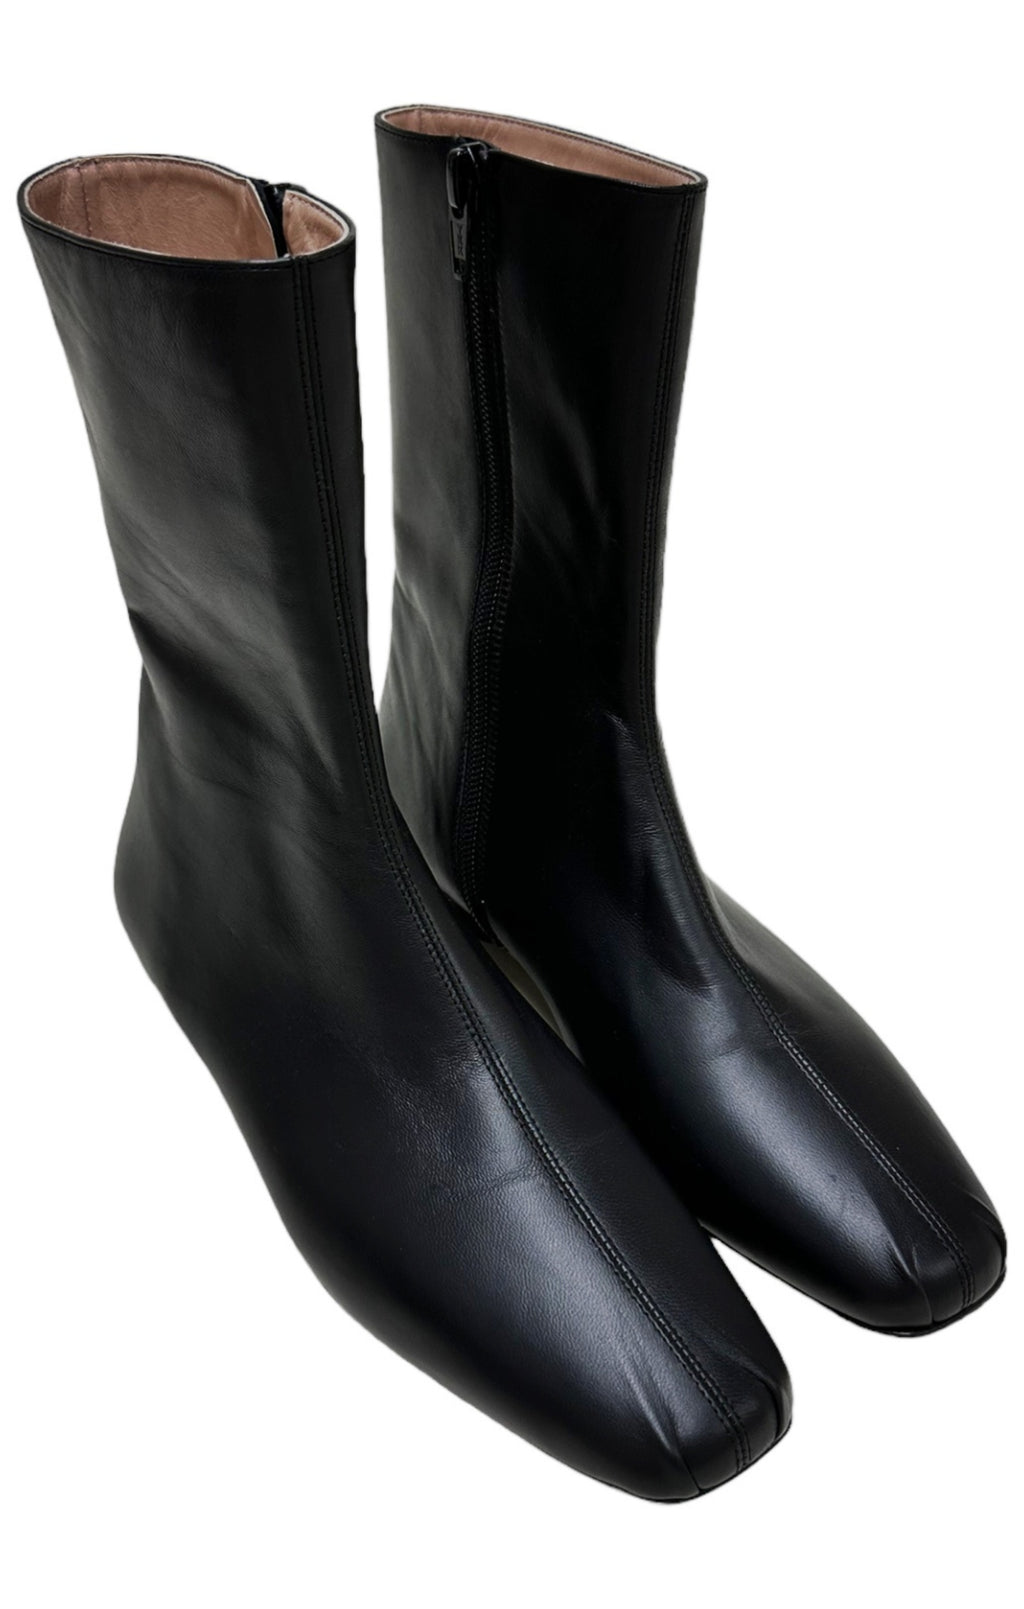 ILIO SMERALDO (RARE & NEW) Boots Size: EUR 35 / Fit like US 5